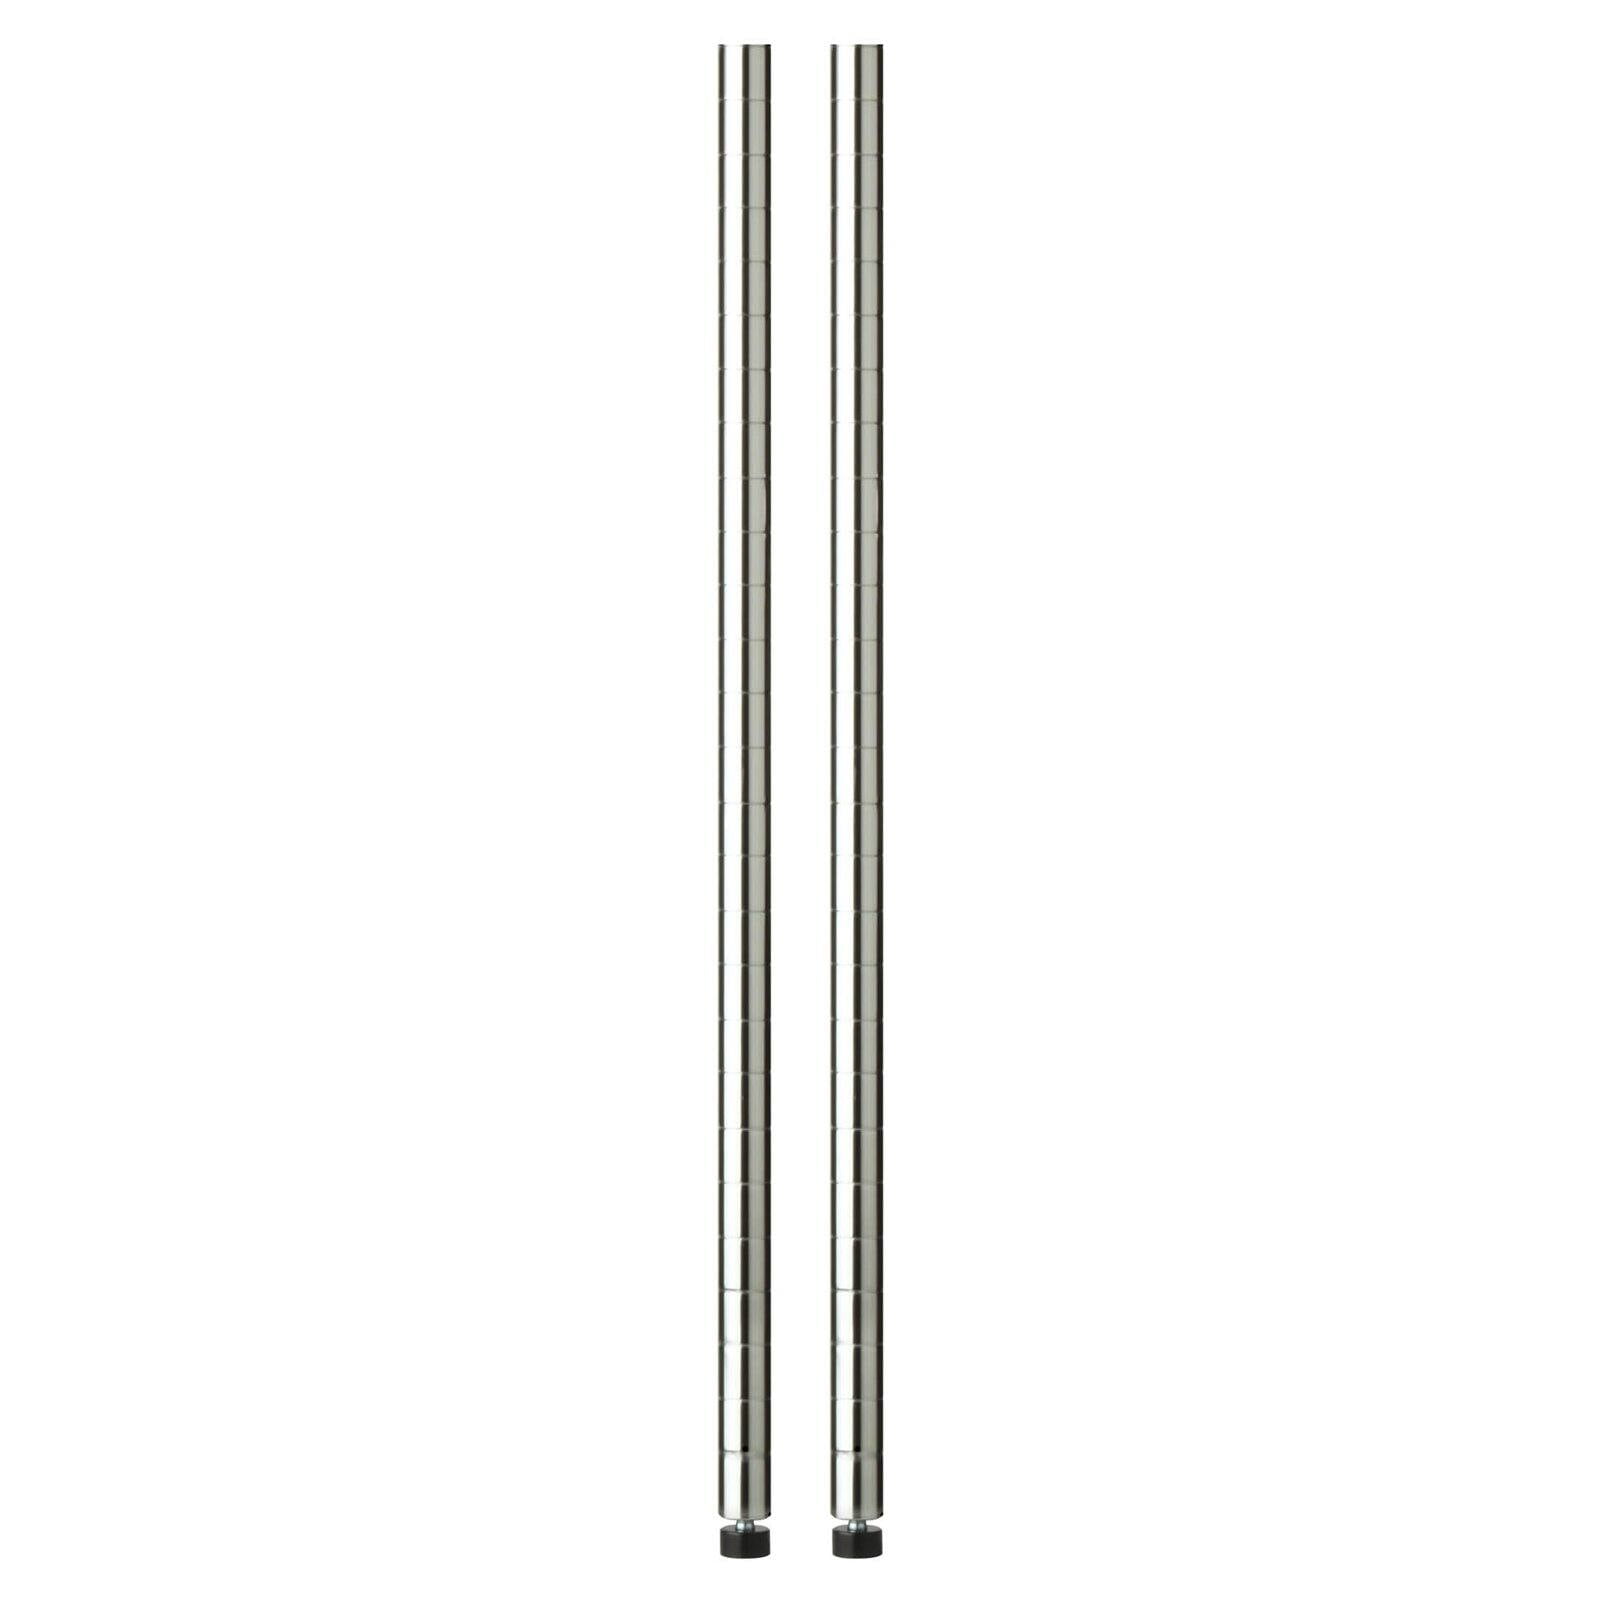 Details about   72" Chrome Shelving Poles Posts Shelf Holder Stand Rack Steel Pole Chrome Plate 